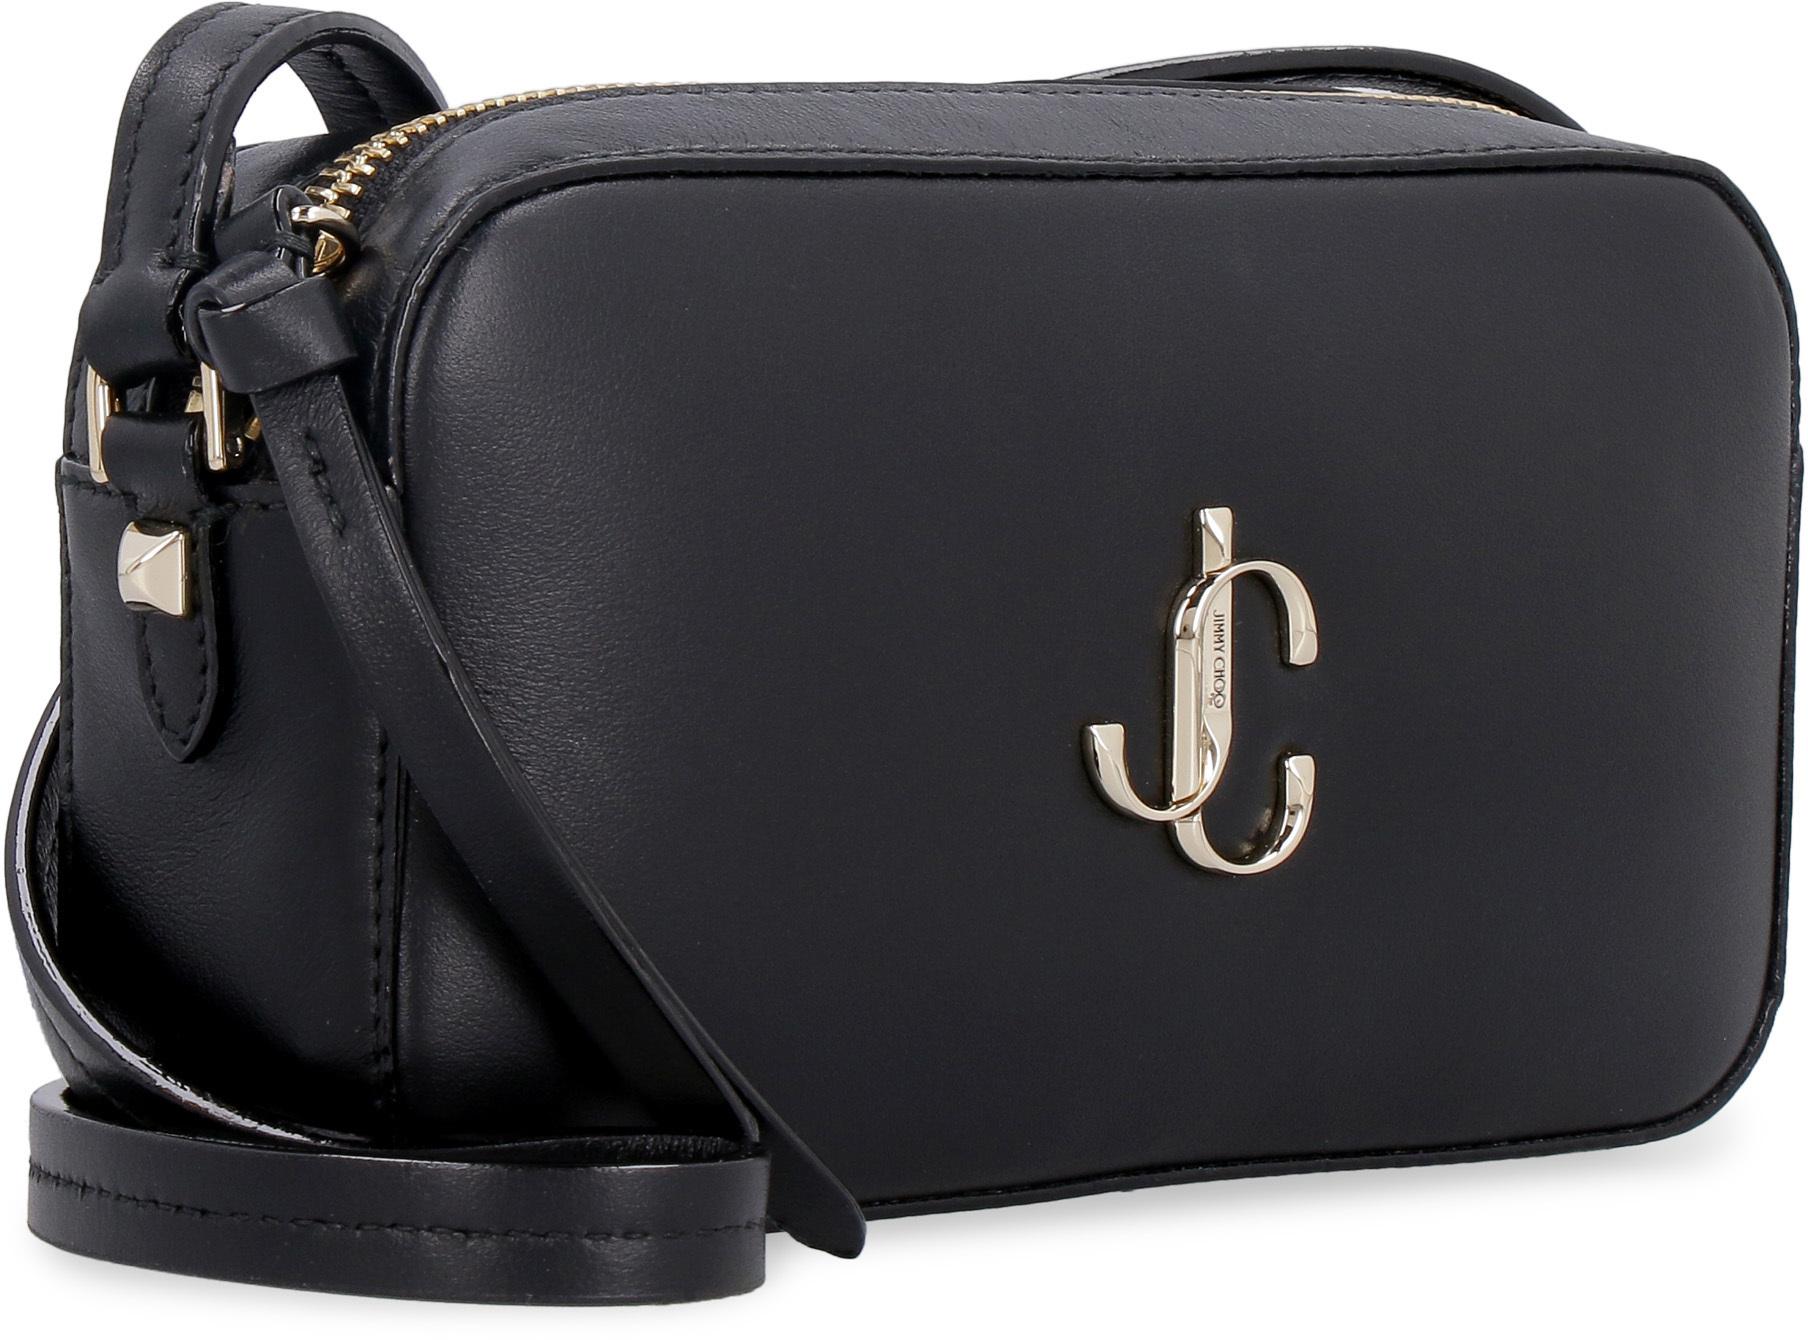 Jimmy Choo Hale Leather Camera Bag in Black - Lyst